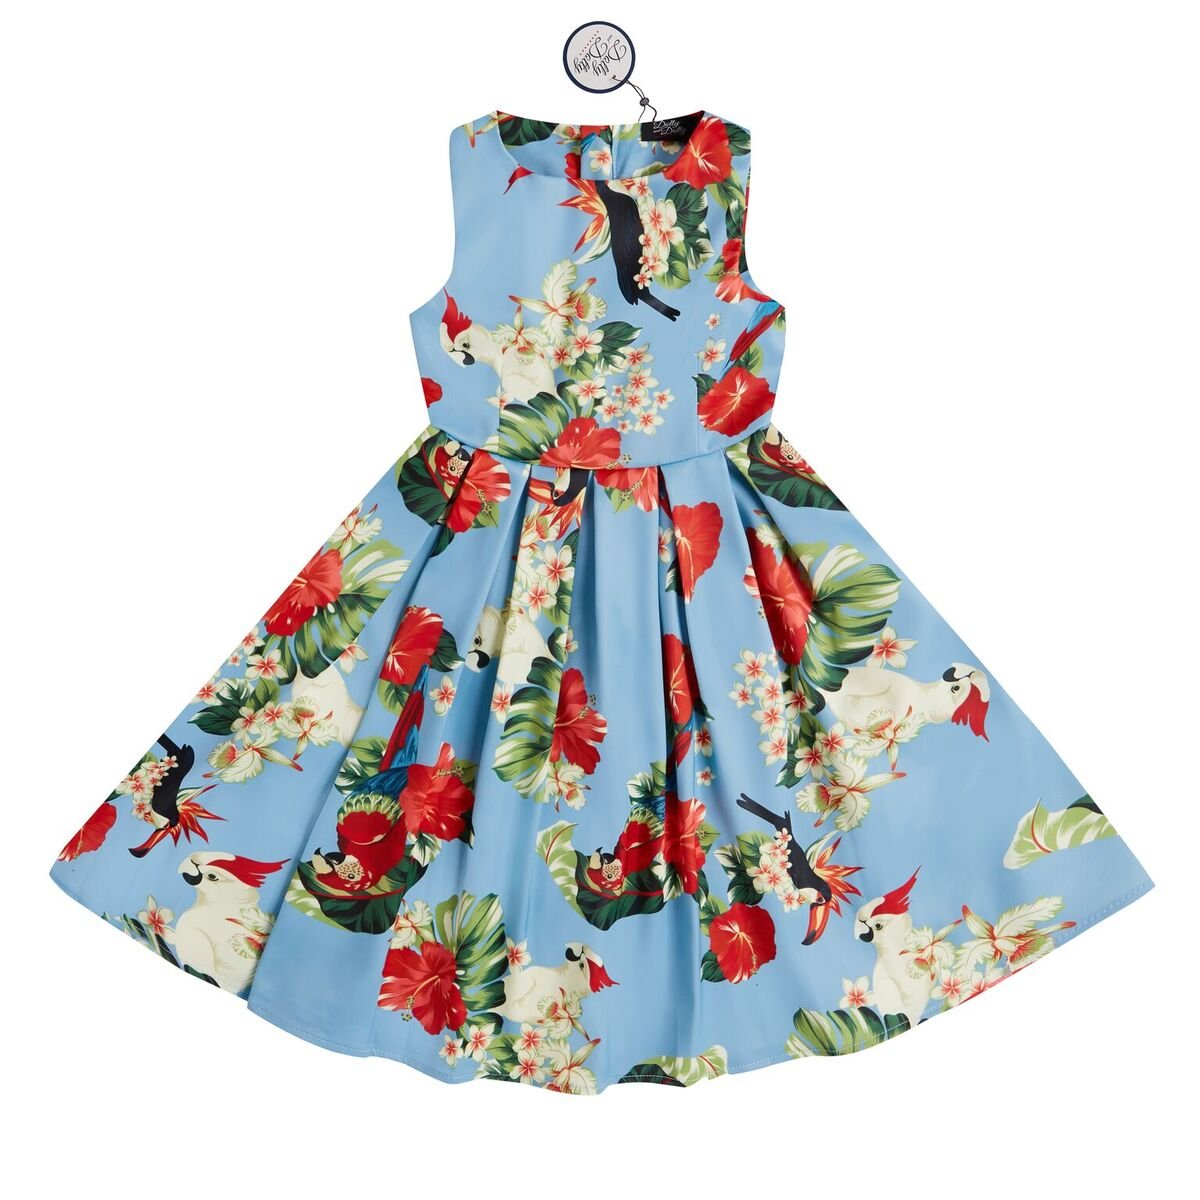 Vintage Inspired Floral Kid's Swing Dress in Light Blue
